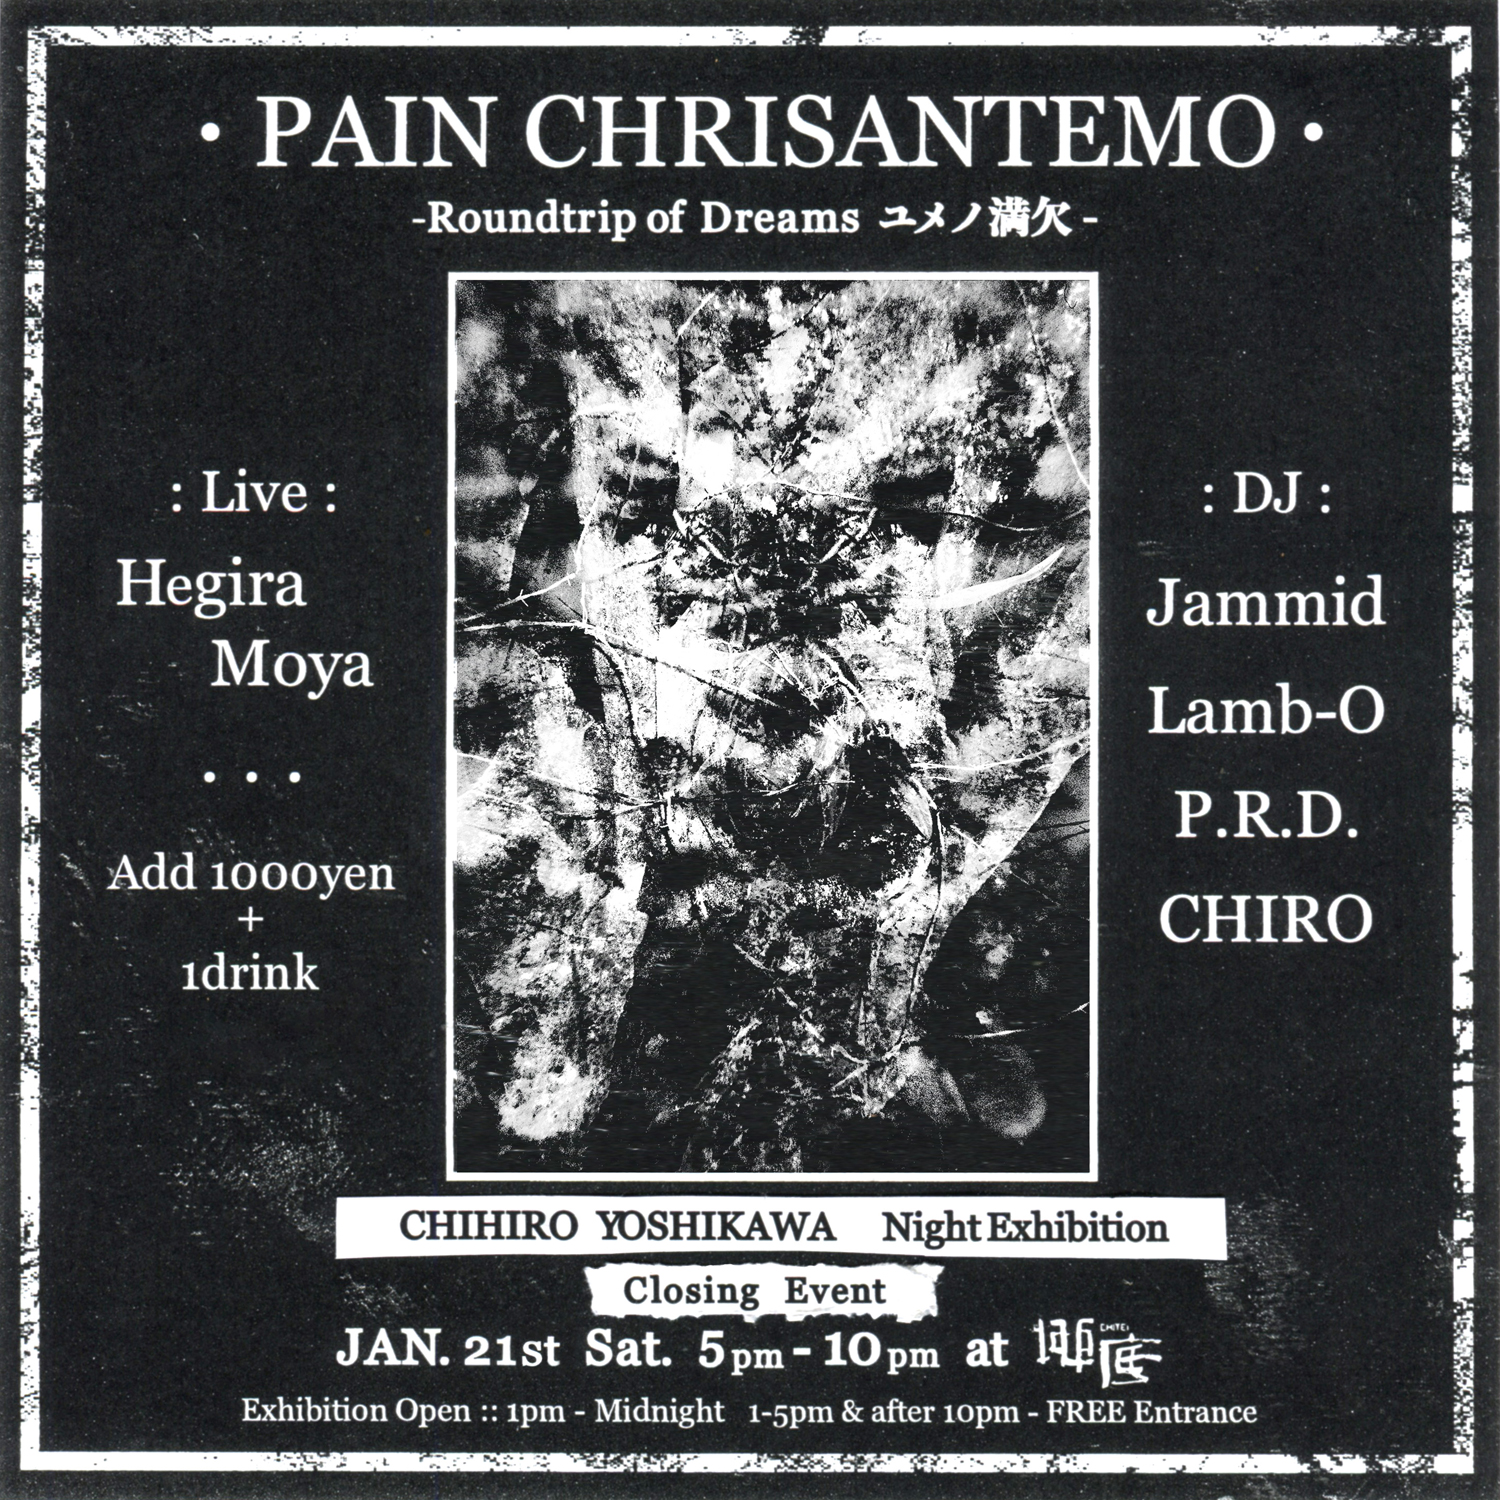 CHIHIRO YOSHIKAWA Night Exhibition "PAIN CHRISANTEMO – Roundtrip of Dreams ユメノ満欠-" Closing Event